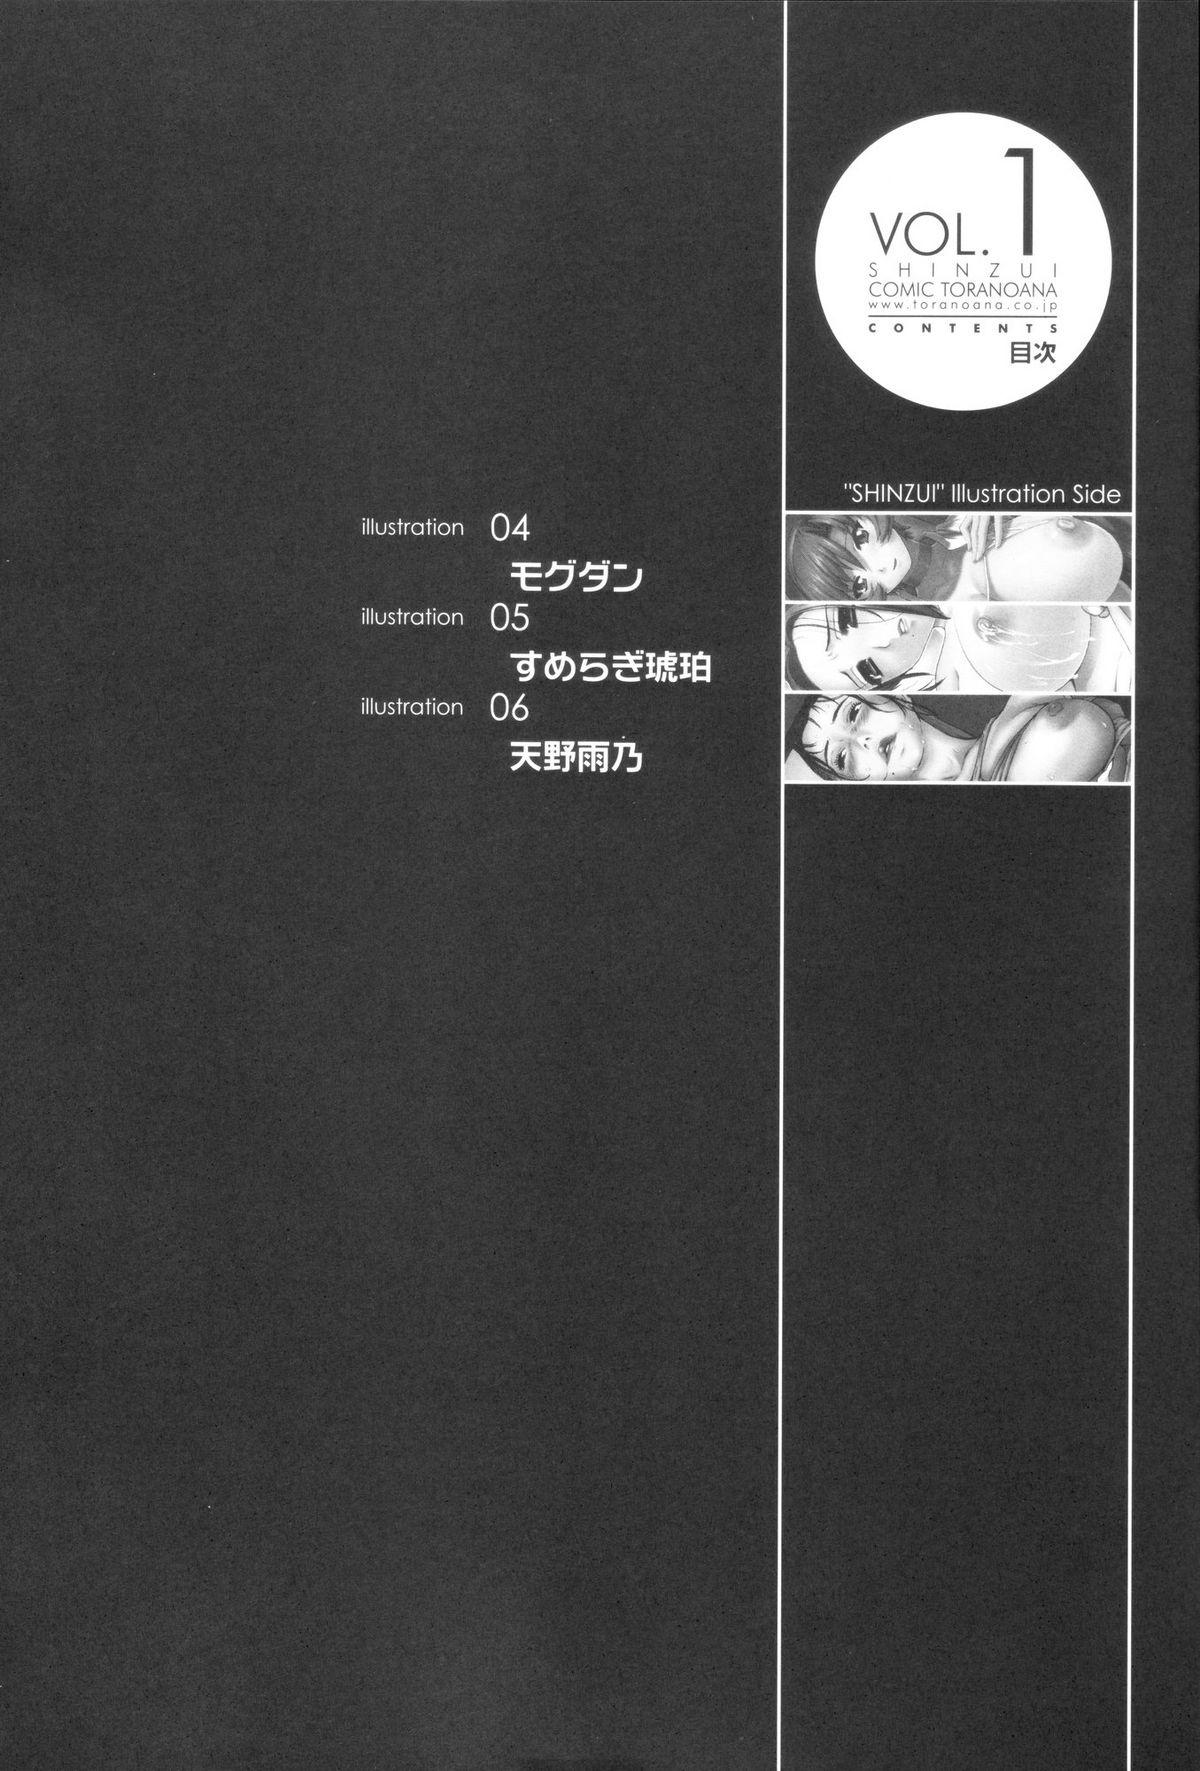 Concha Shinzui Vol. 1 Vadia - Page 7